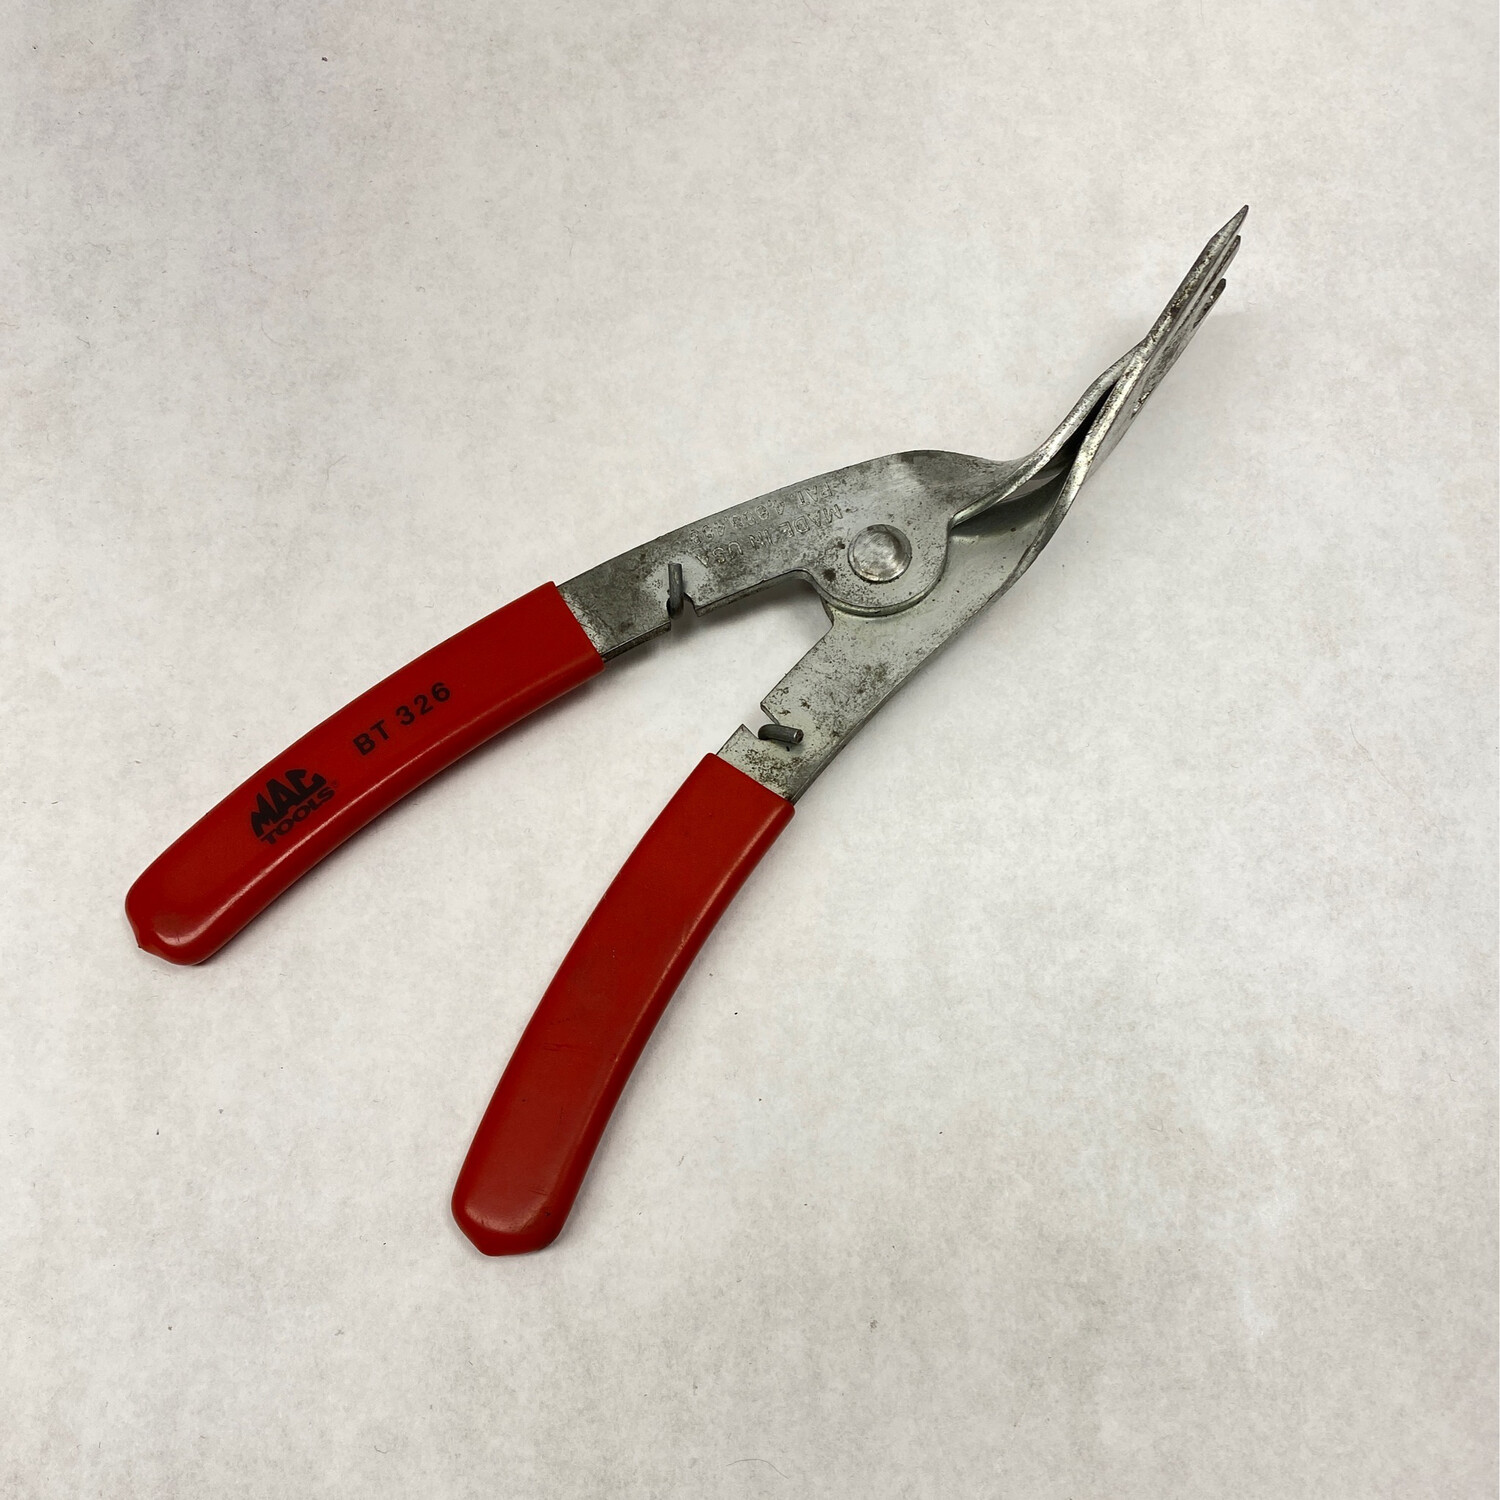 Mac Tools Trim Clip Pliers, BT 326